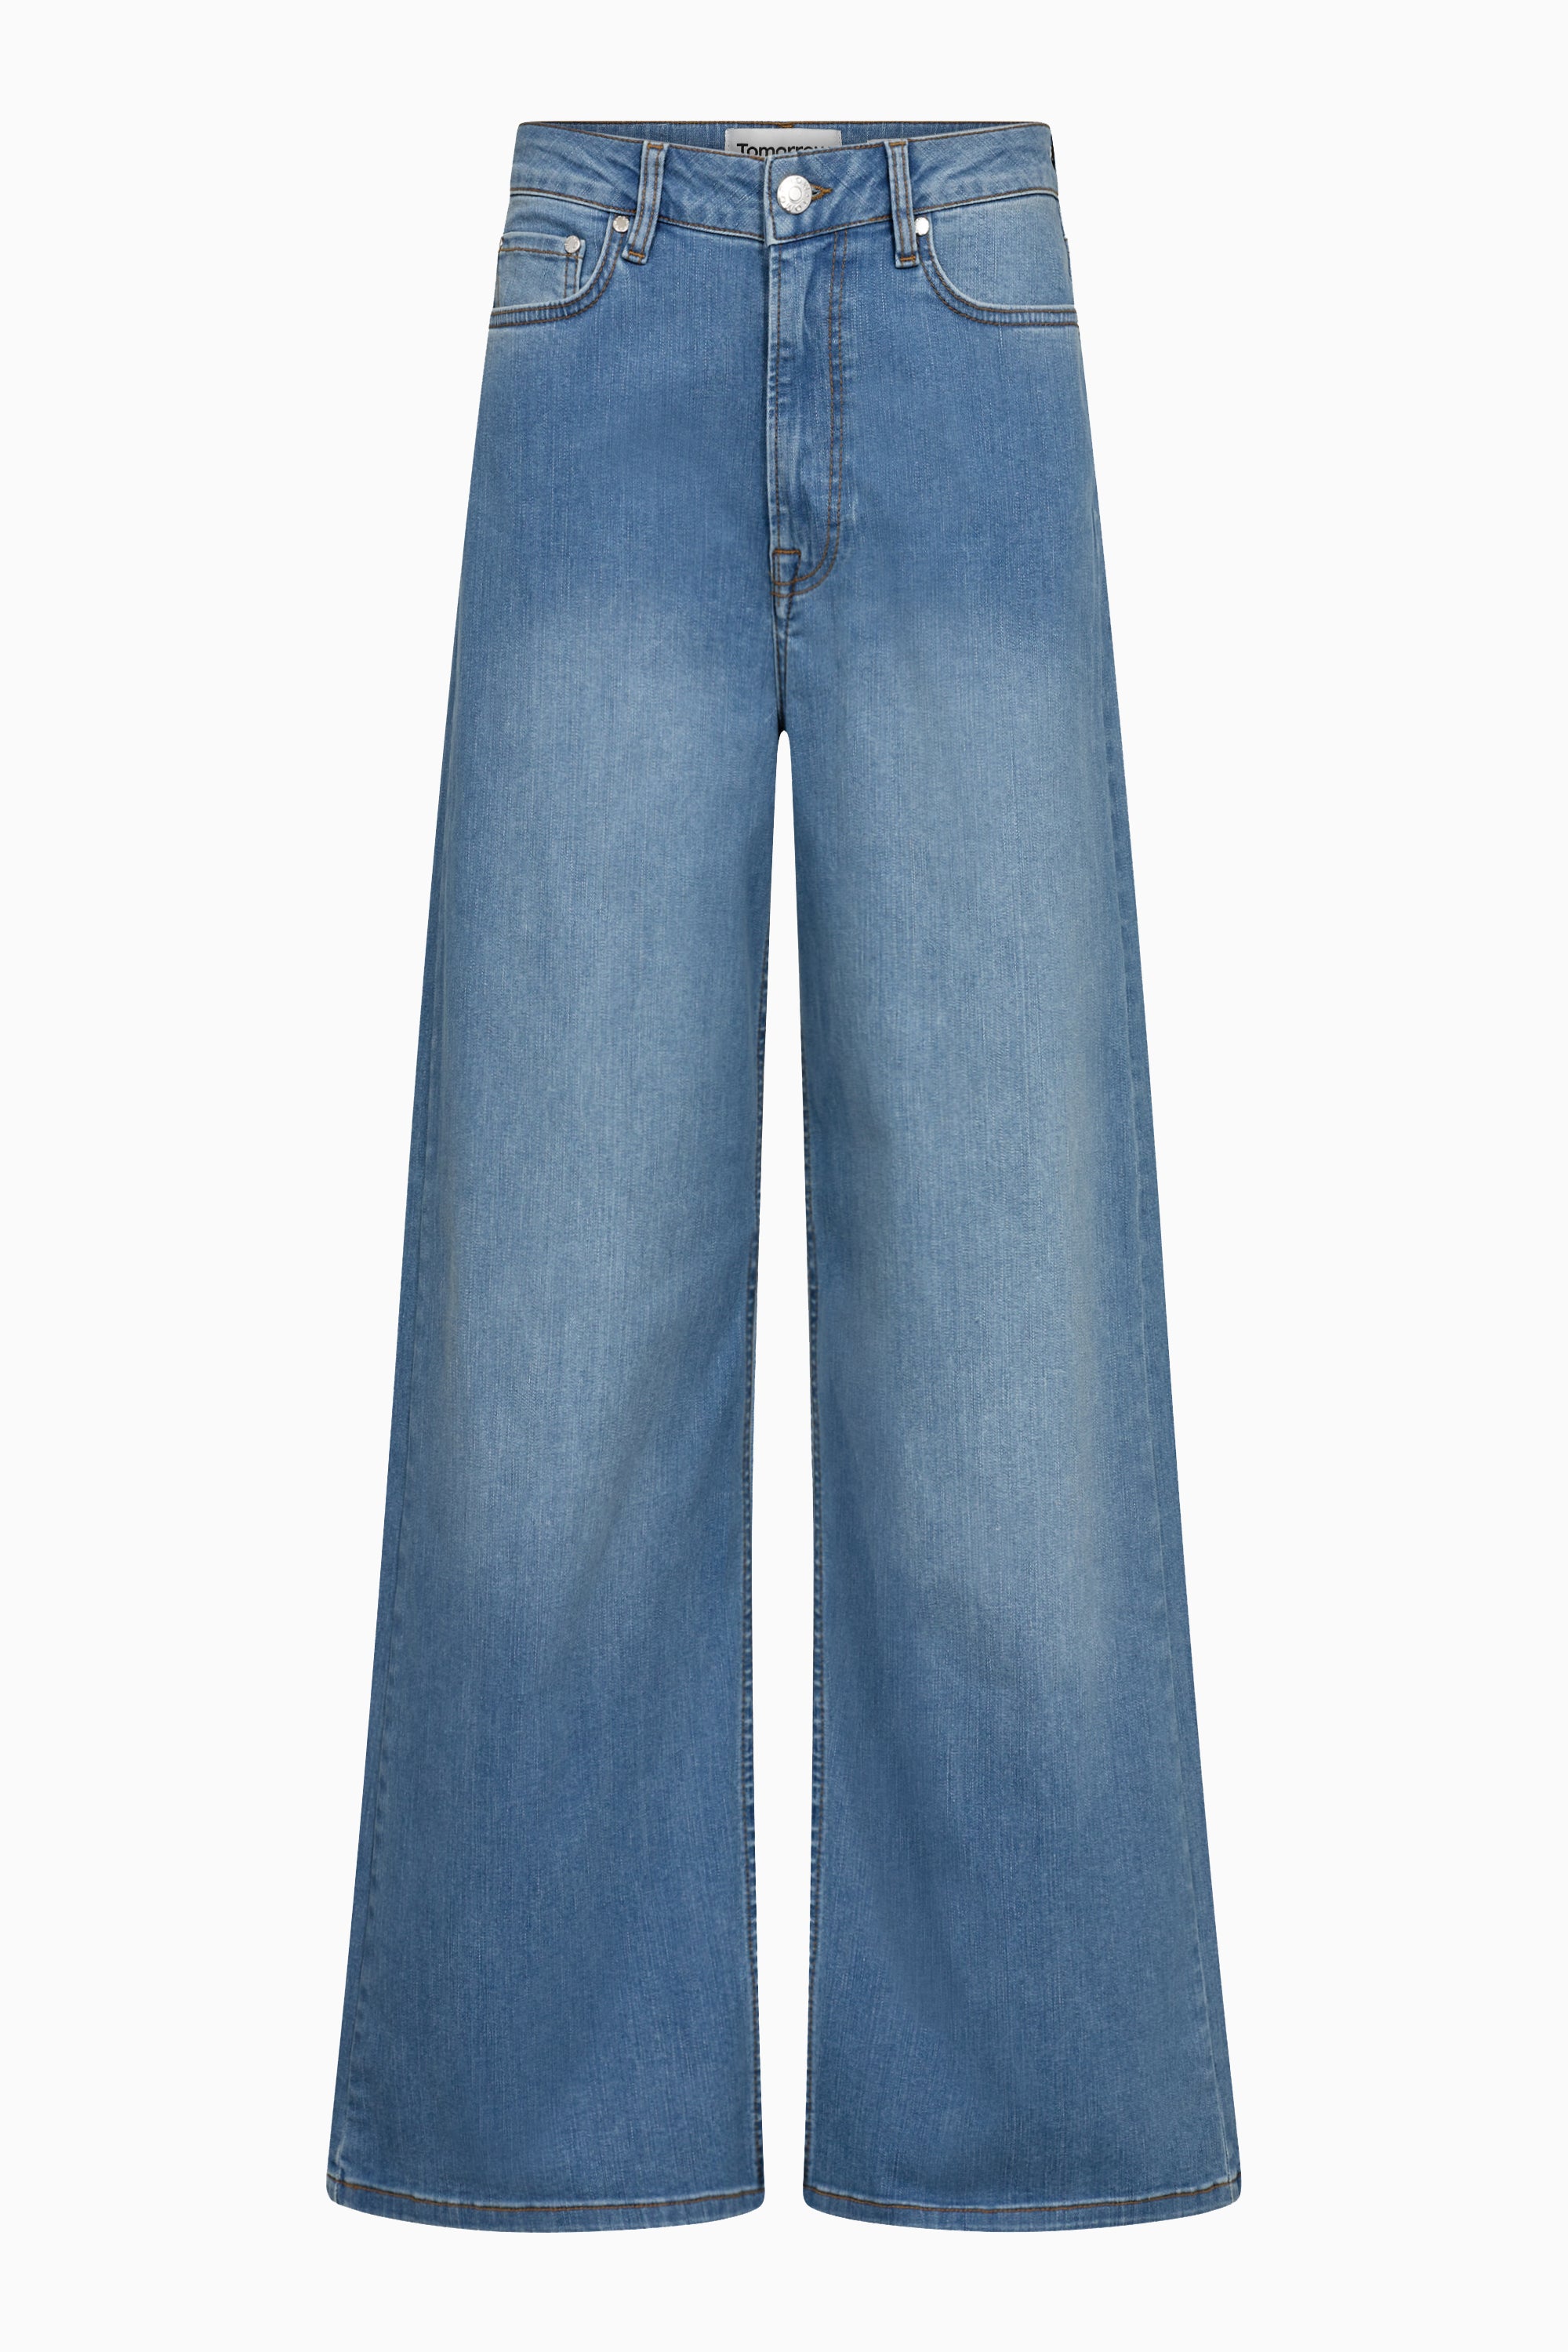 Tomorrow TMRW Arizona Jeans - Bleach Florence Jeans & Pants 51 Denim Blue